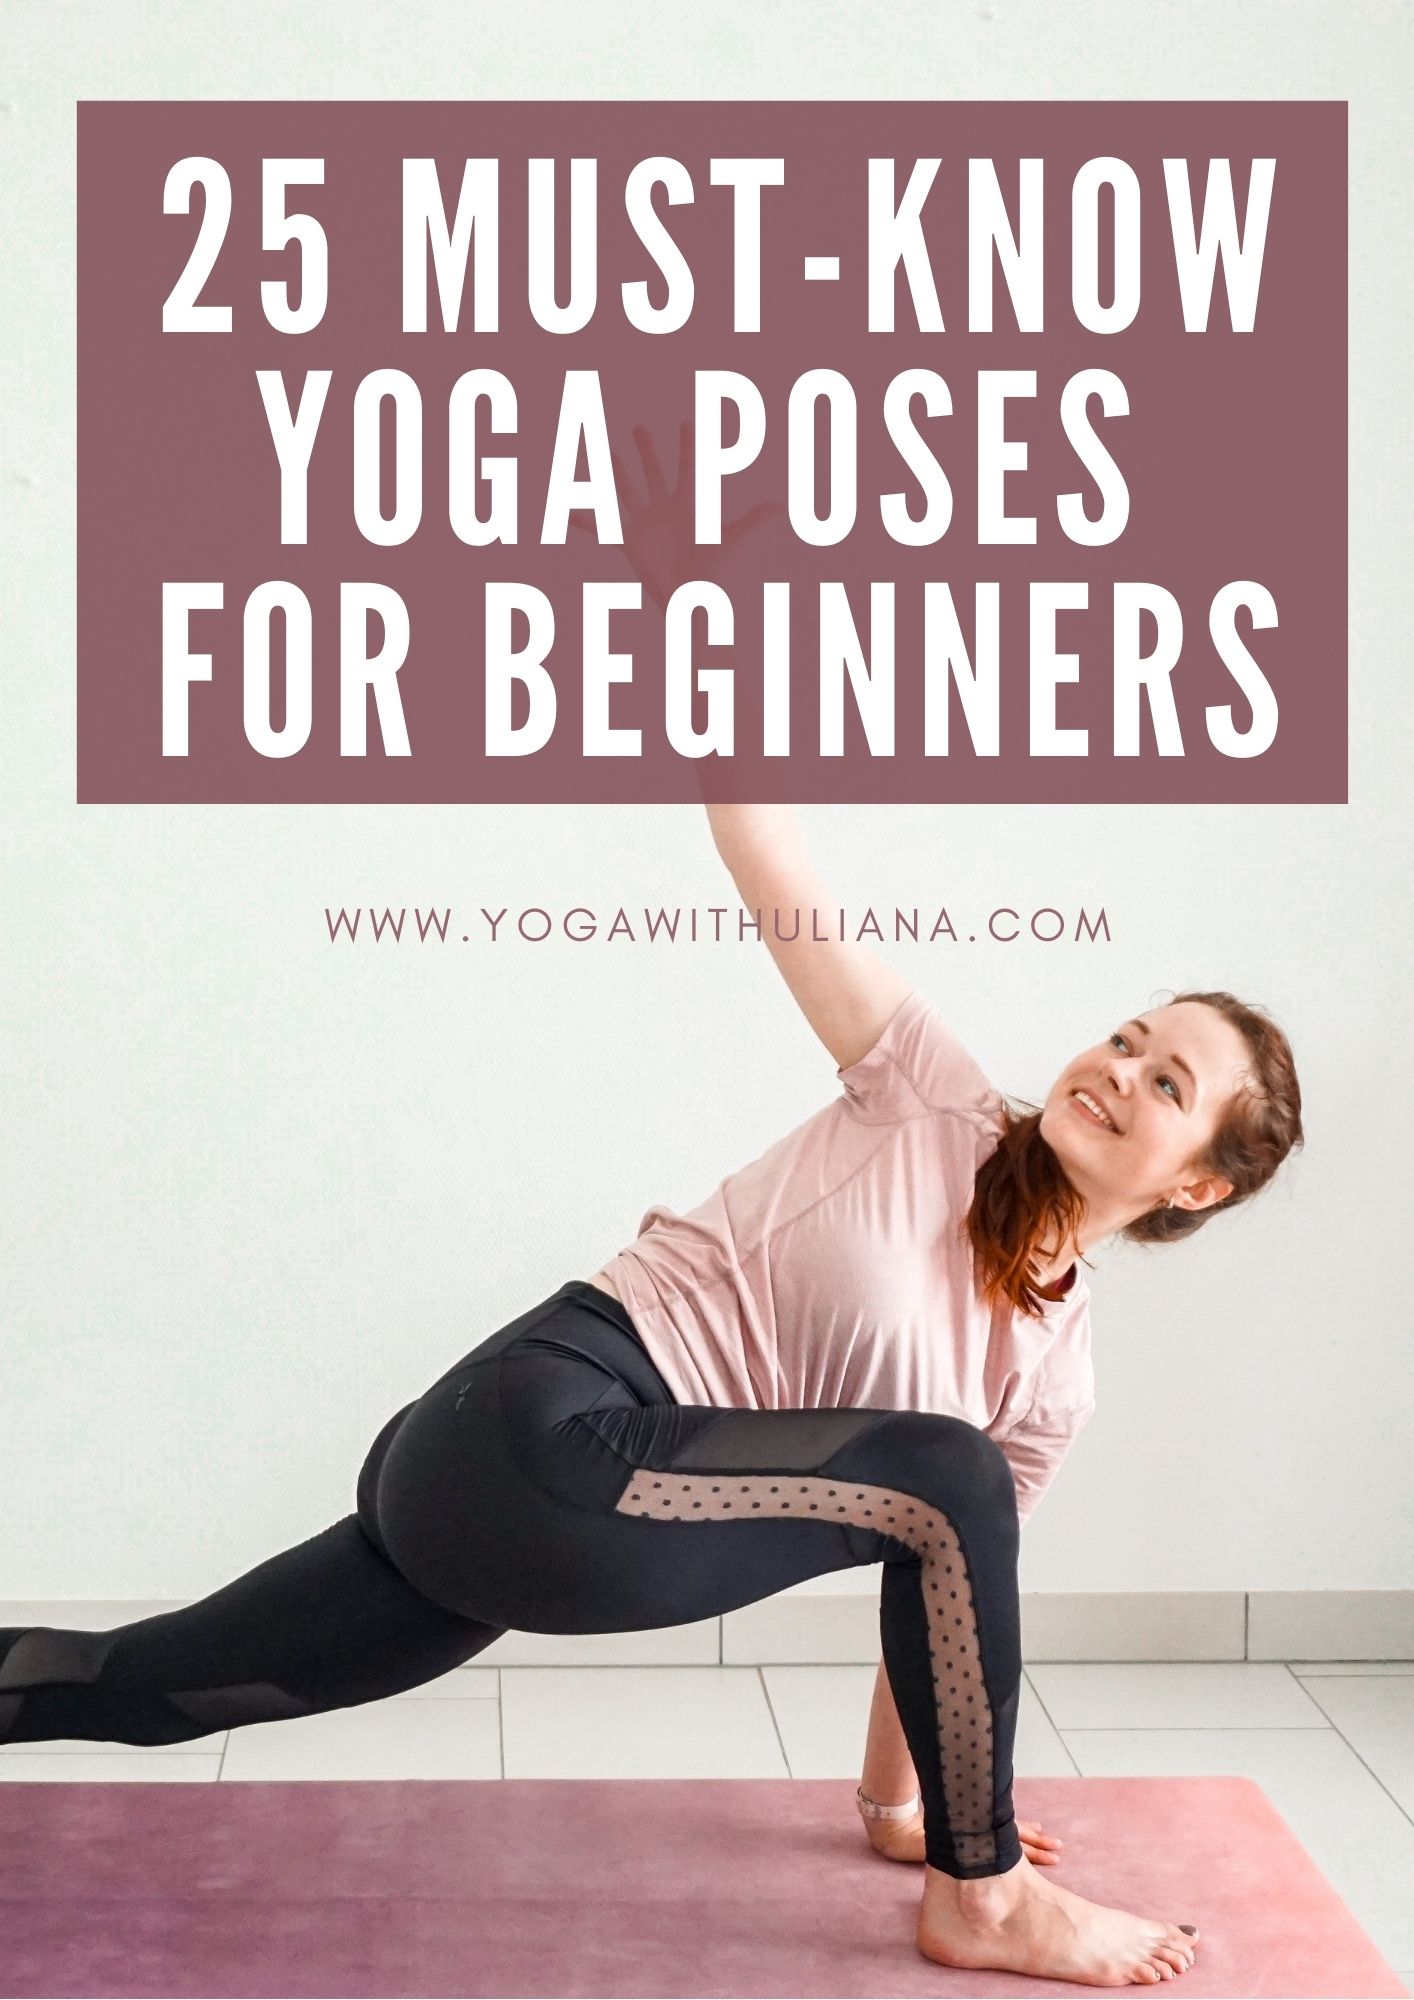 Beginner yoga poses printable pdf